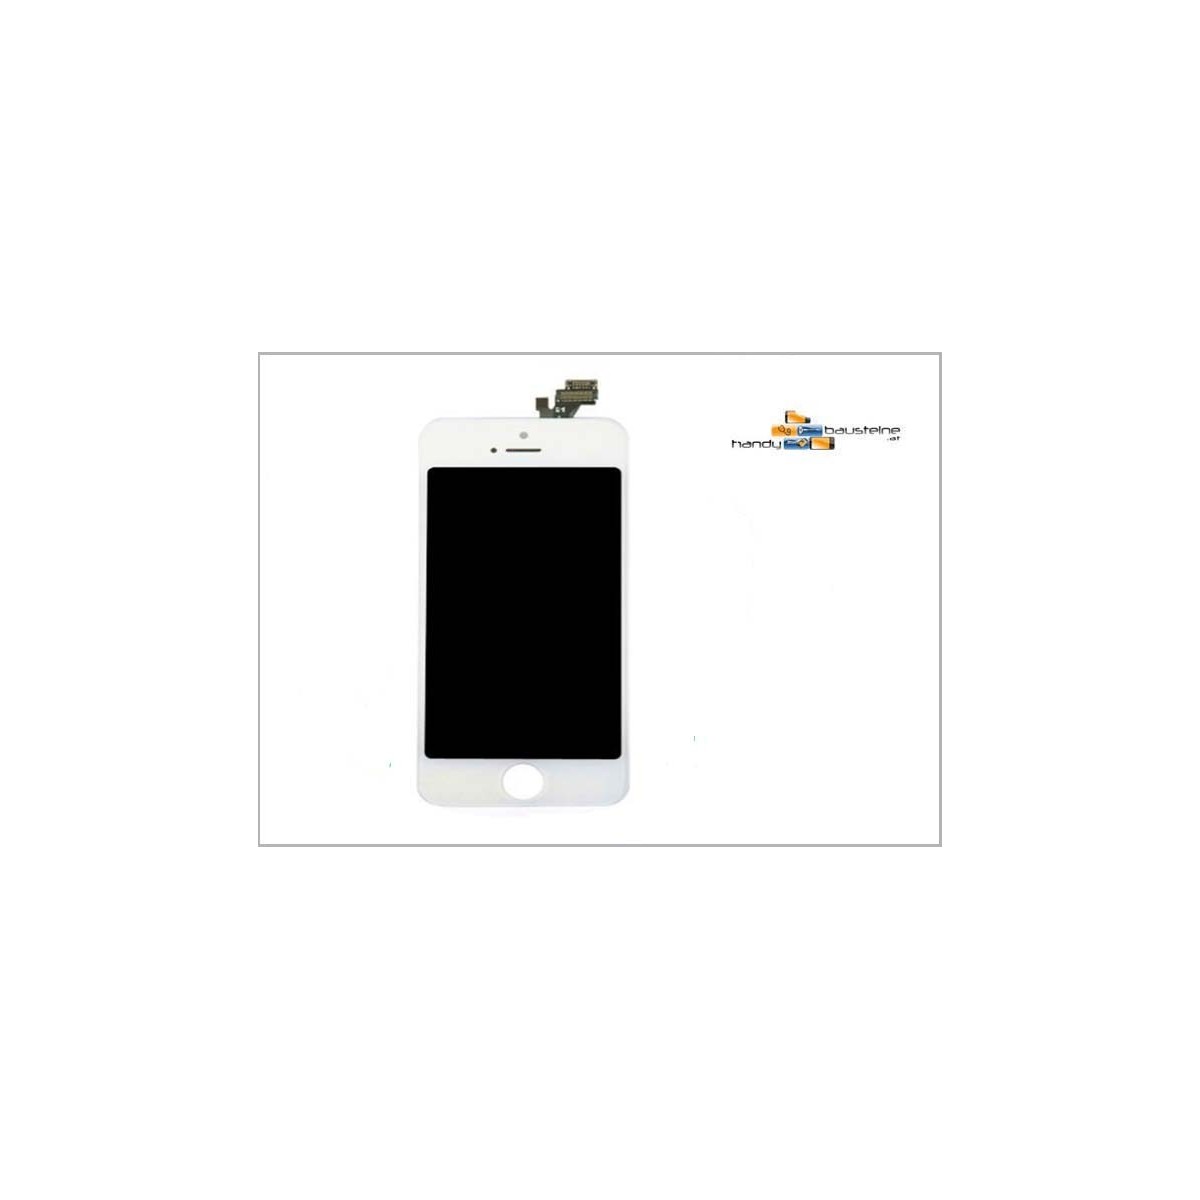  	 Original iPhone 5 Retina Display WEISS komplett LCD Touchscreen Scheibe Glas weiß